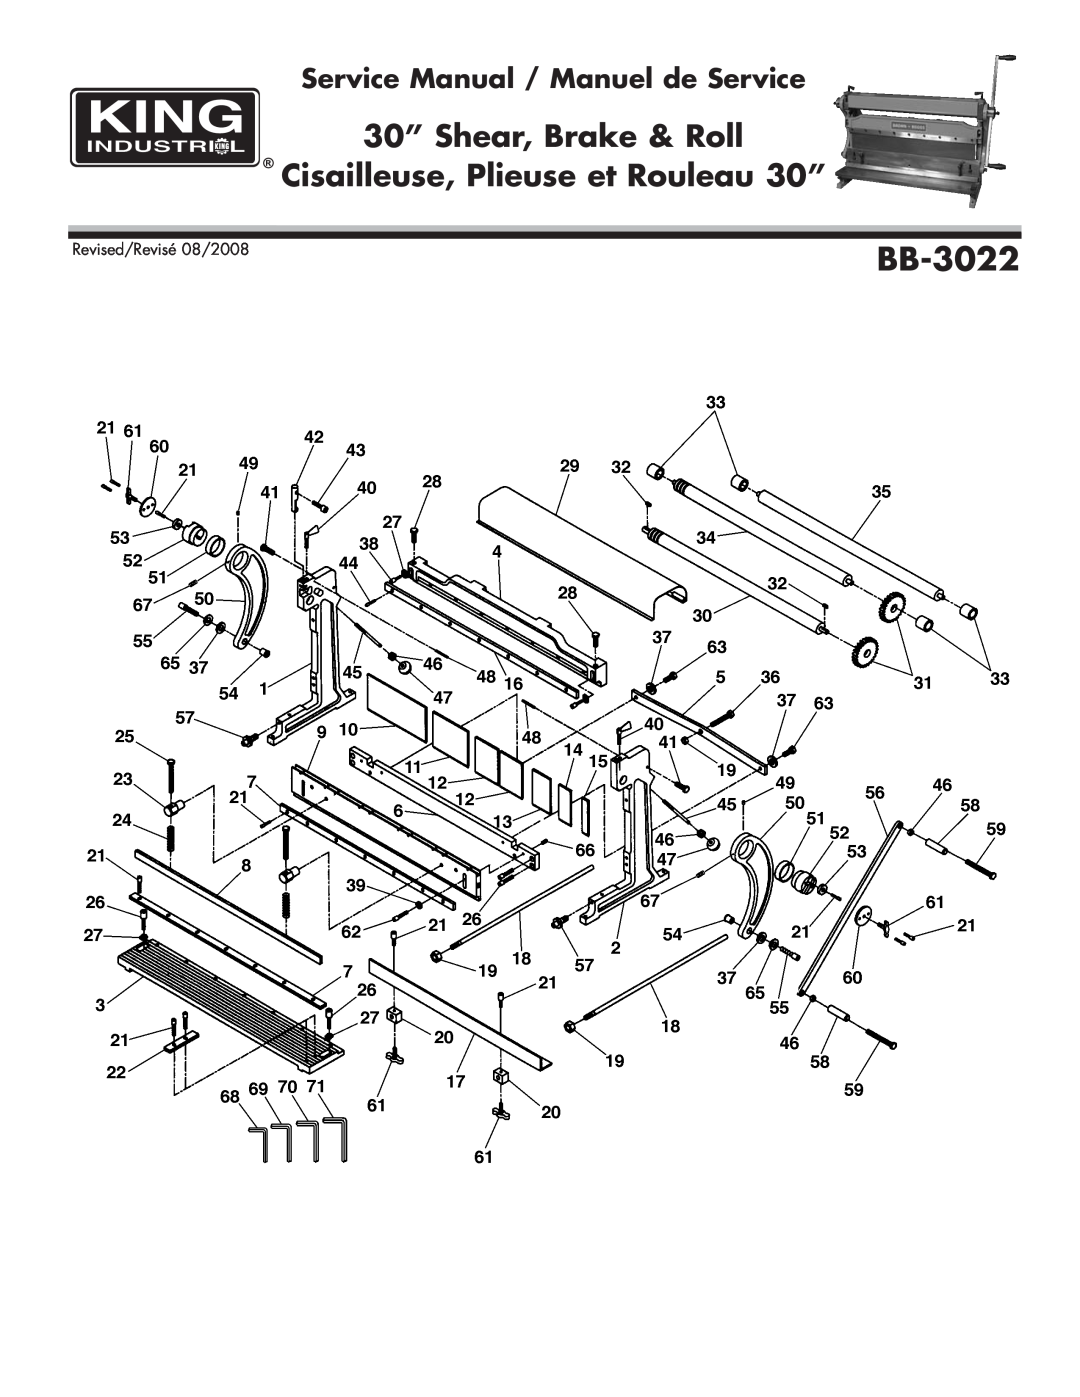 King Canada BB-3022 service manual 30” Shear, Brake & Roll Cisailleuse, Plieuse et Rouleau 30”, Revised/Revisé 08/2008 